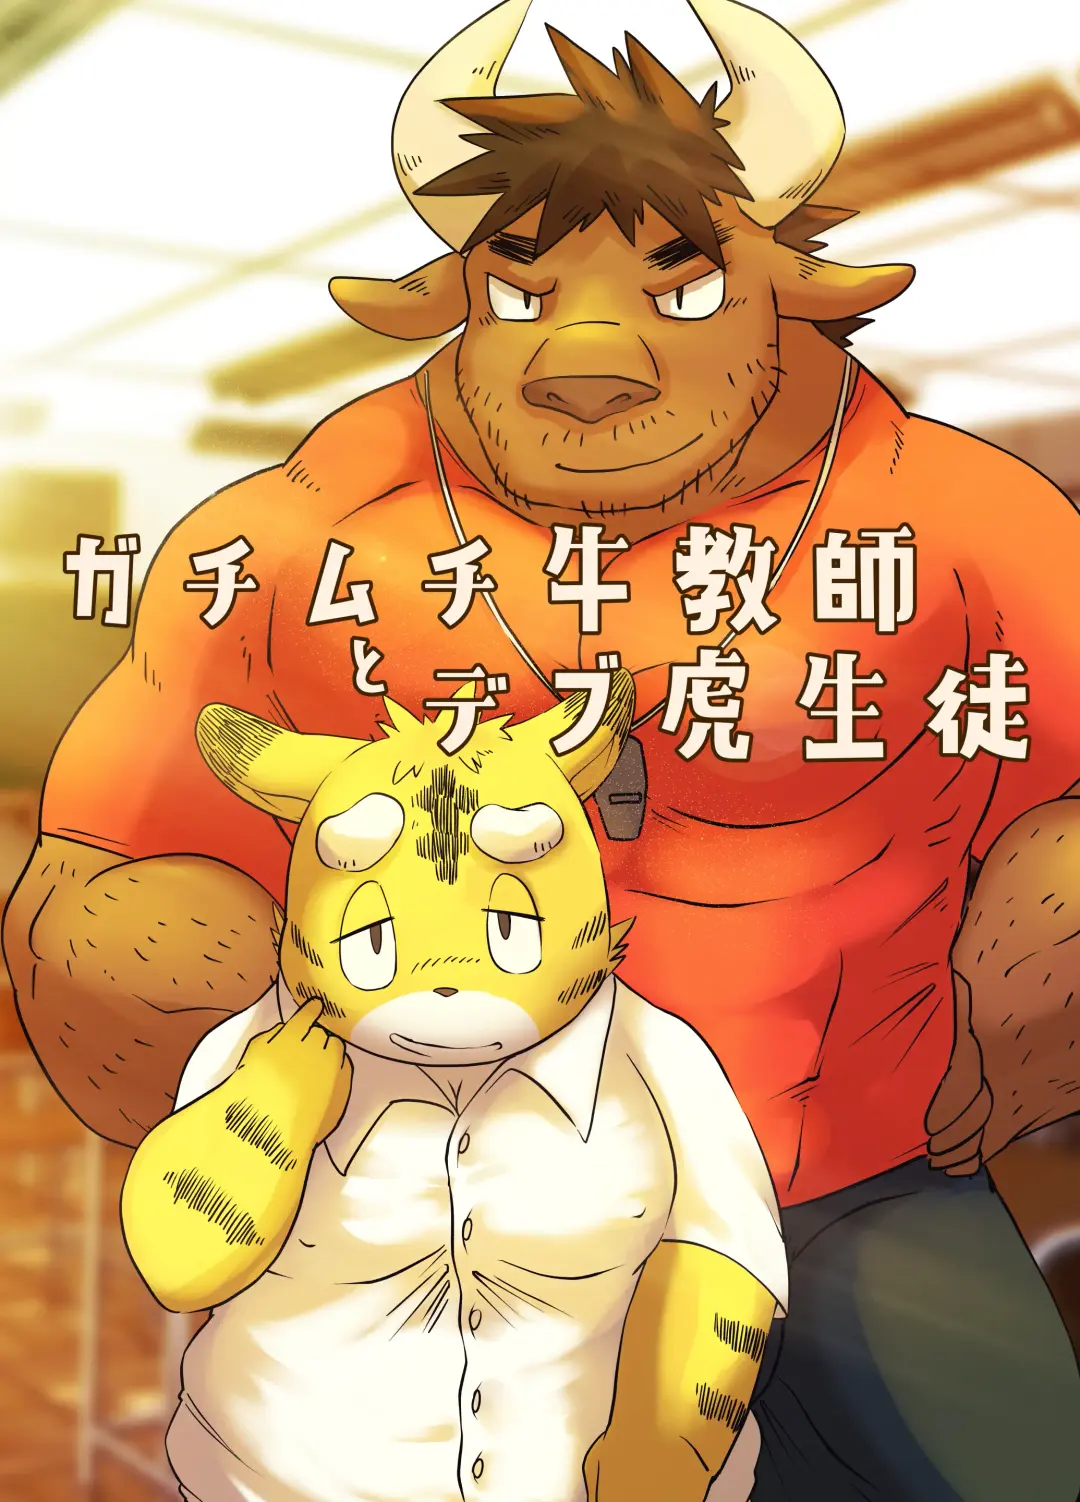 Read [Rusk] Muscular Bull Teacher & Chubby Tiger Student 1 - Fhentai.net